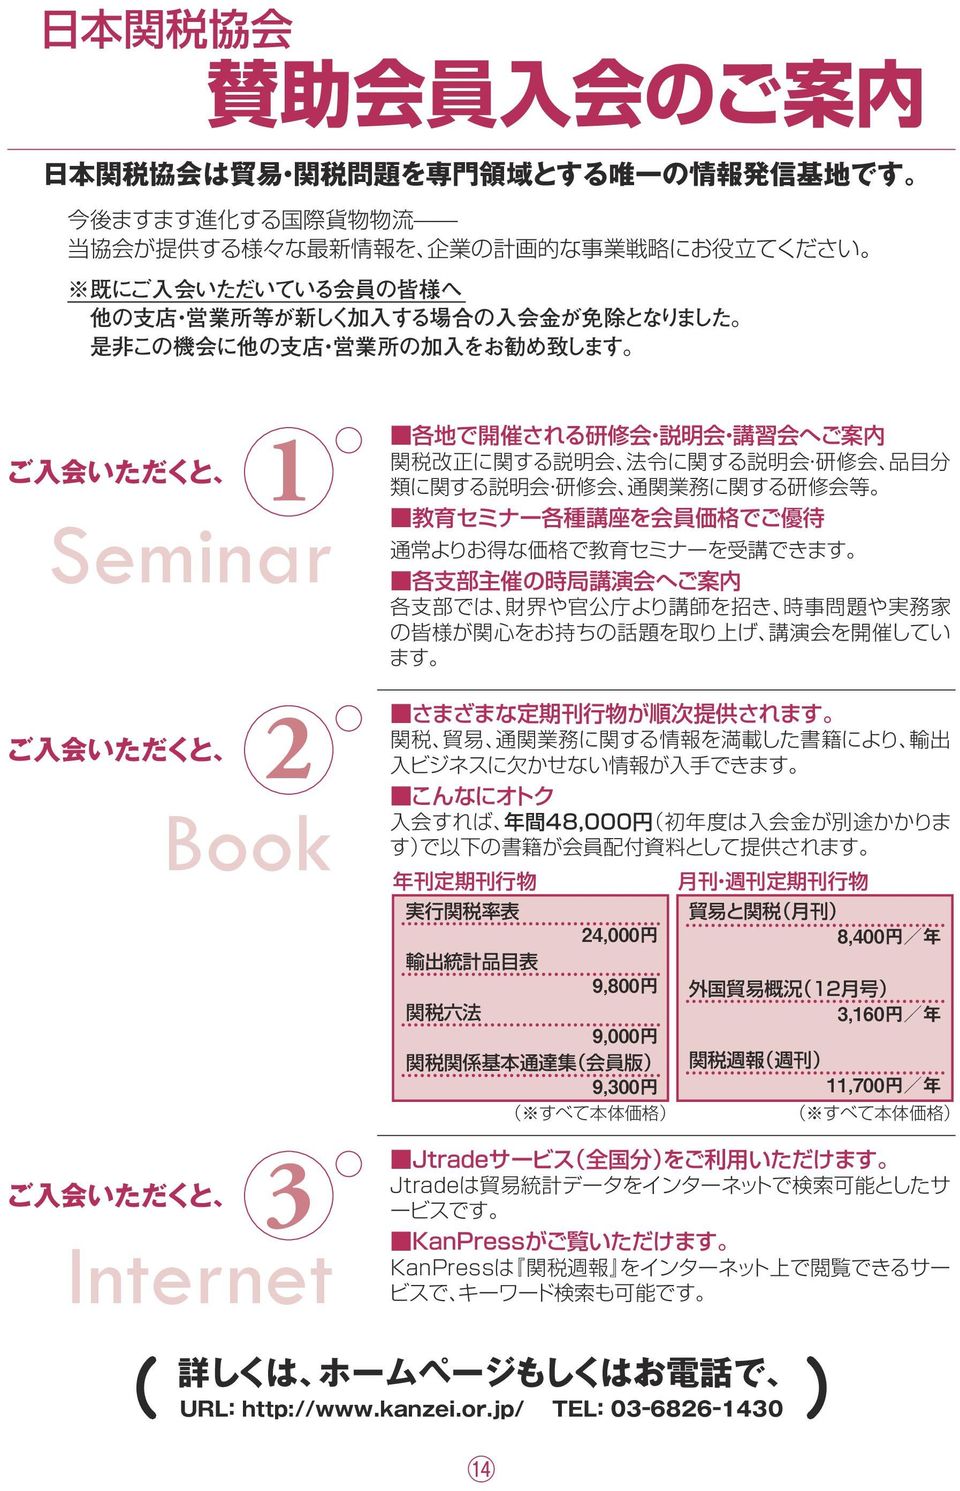 1 Seminar